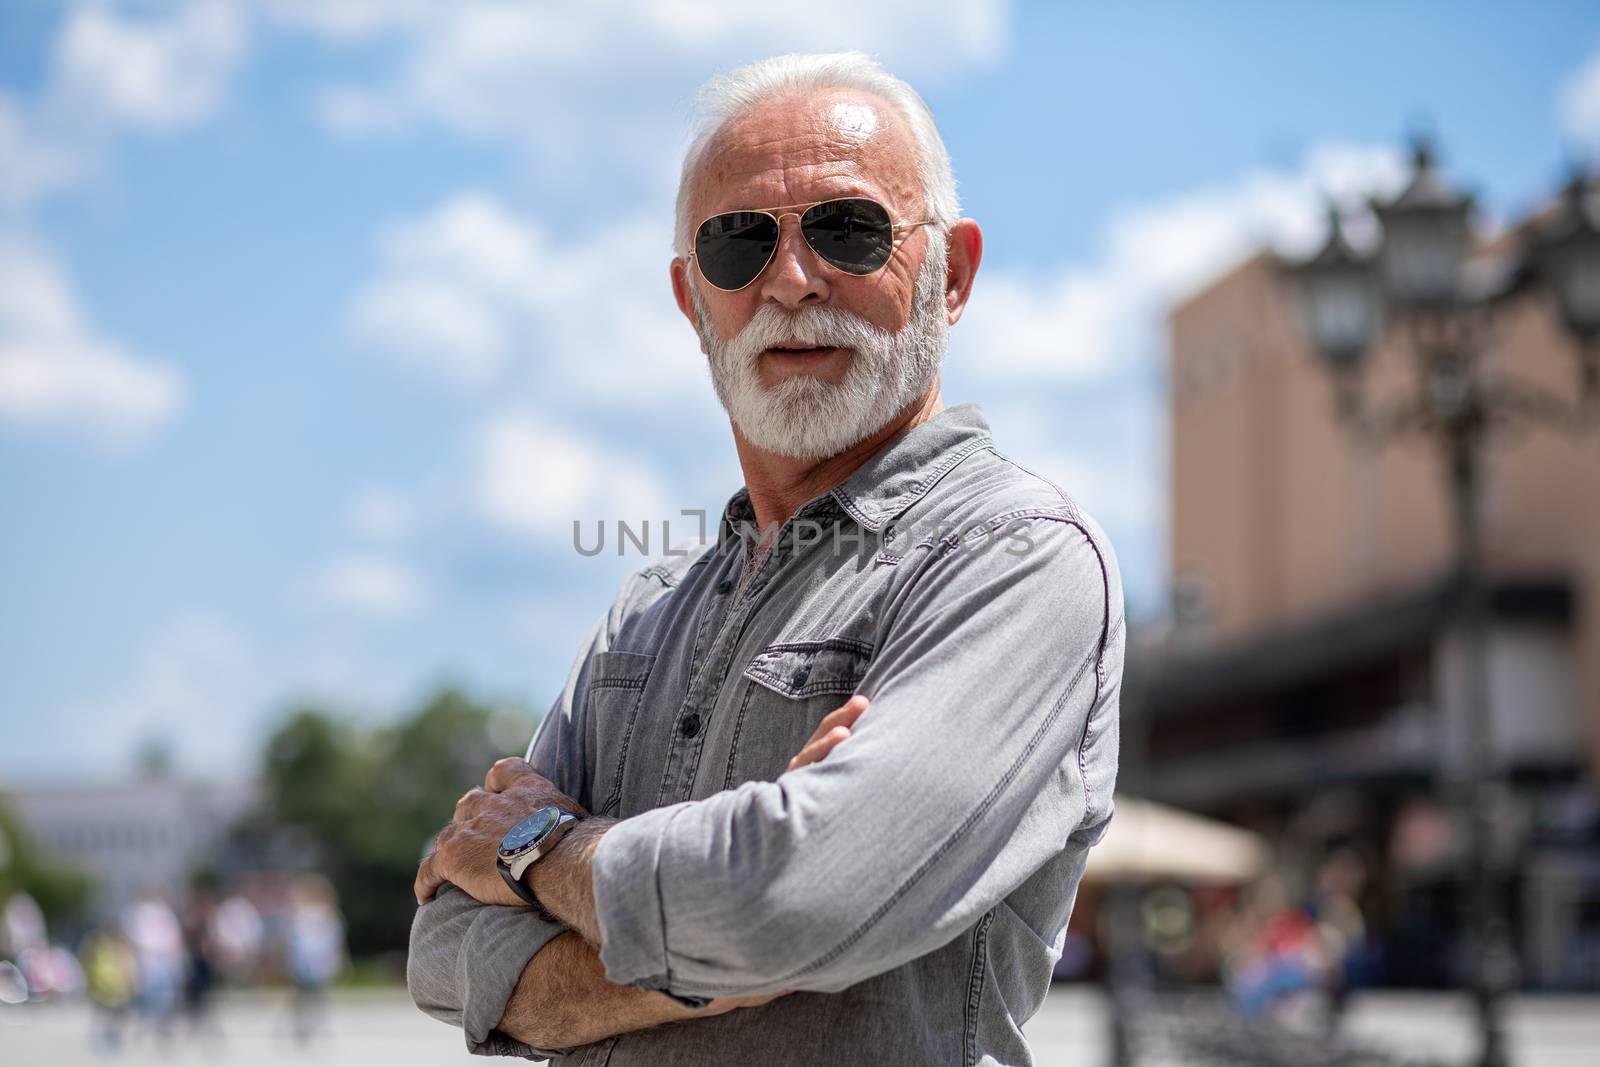 Experienced senior man with sunglass and beard on street portrai by adamr